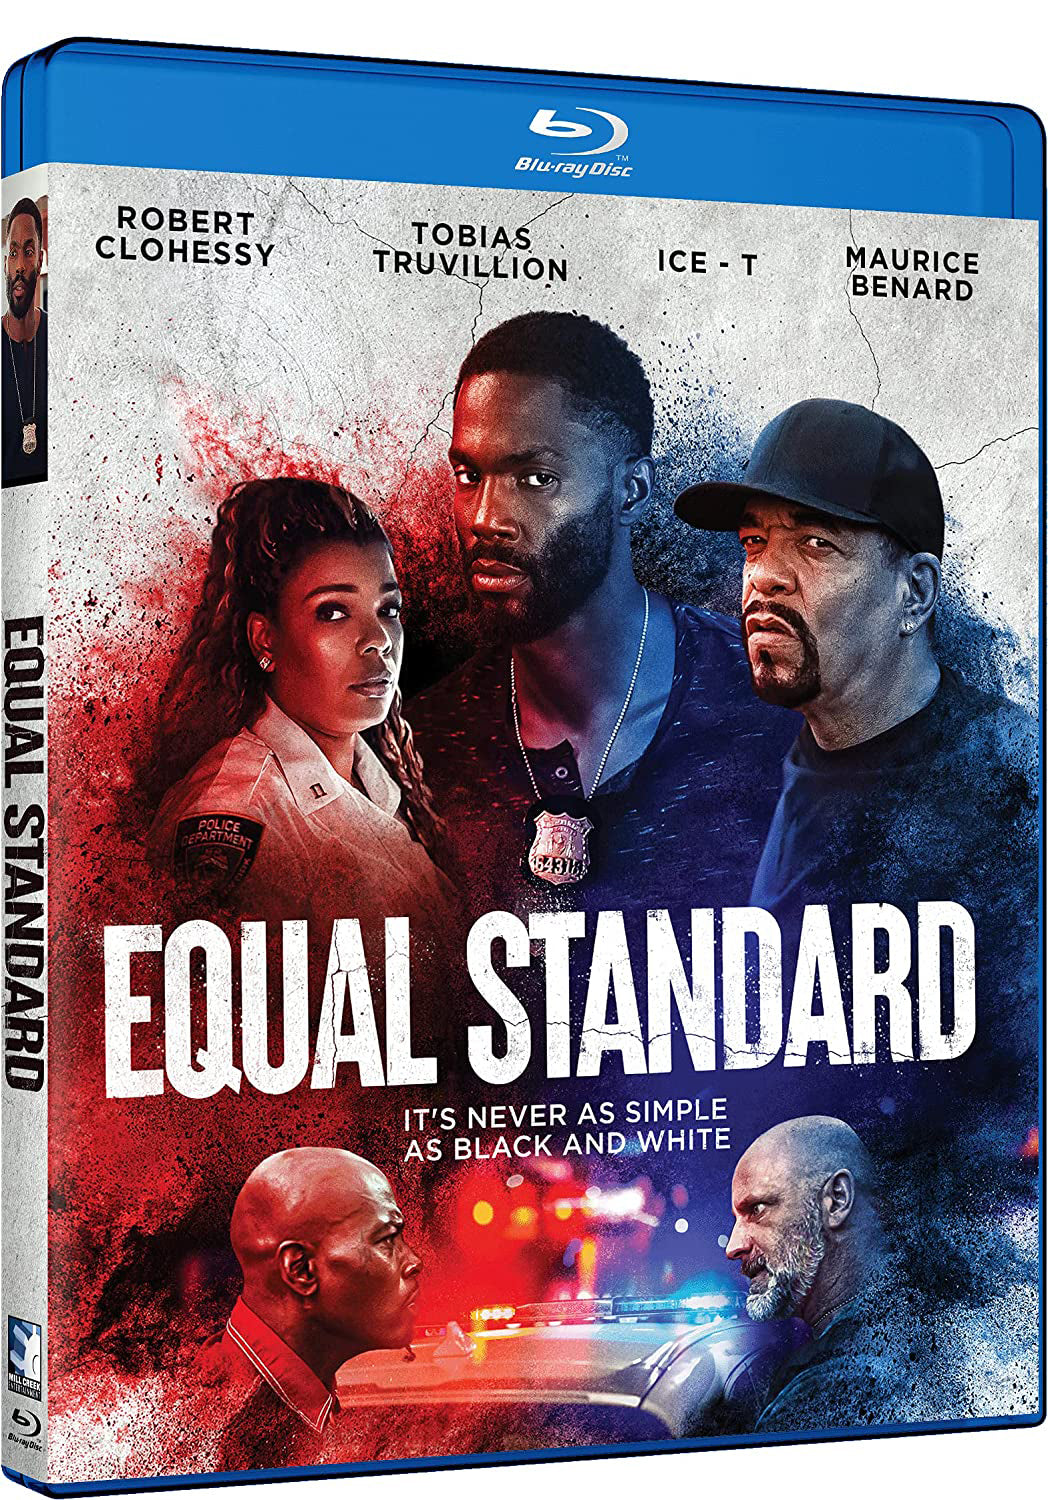 Equal Standard [Blu-ray] cover art